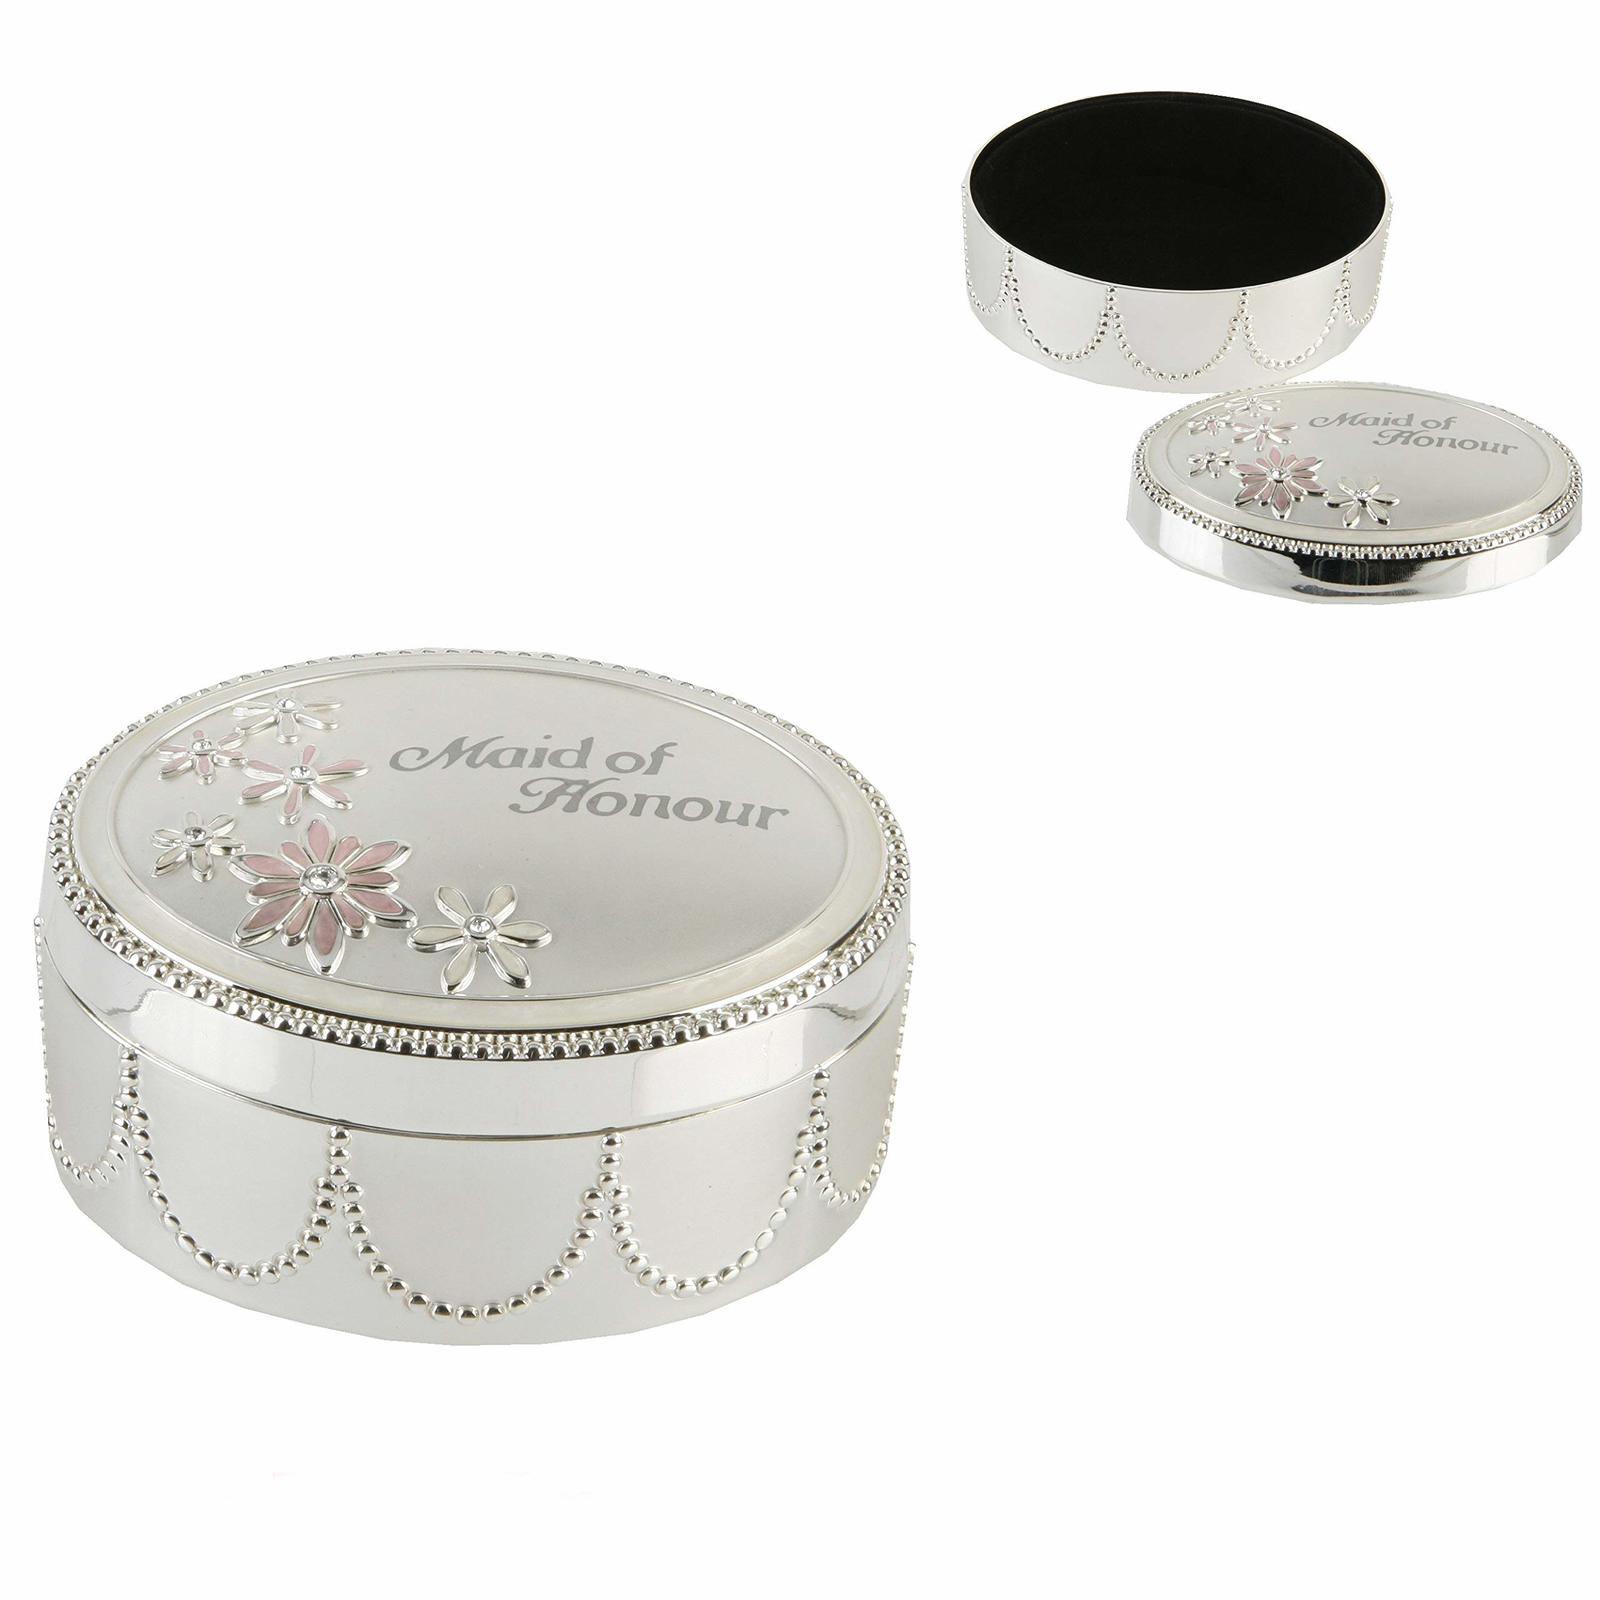 Silverplated Maid of Honour Trinket Box - Beautiful Daisy Design by Juliana - $15.92